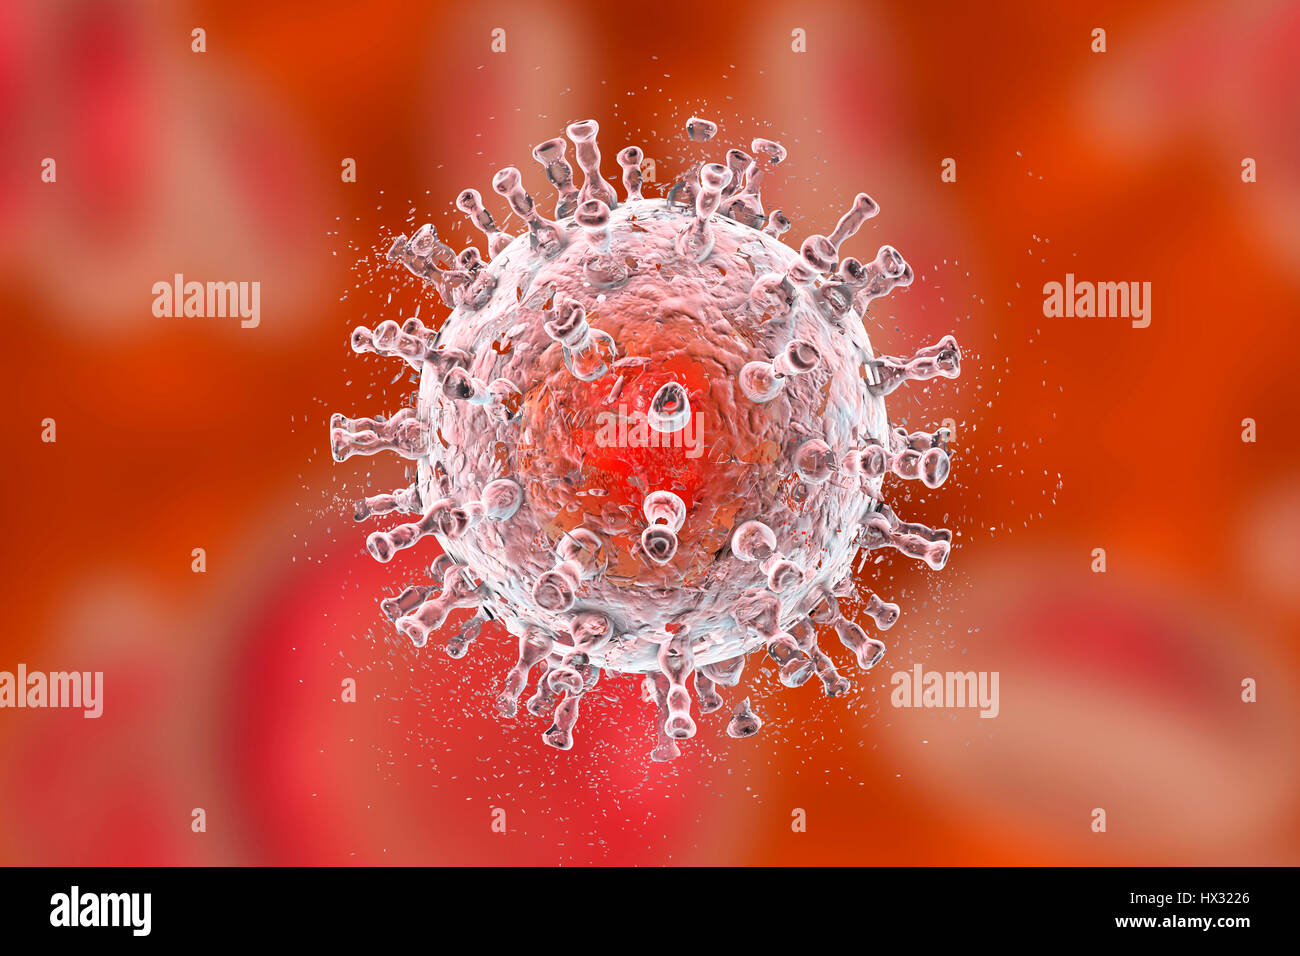 Herpesvirus Fotos e Imágenes de stock - Alamy